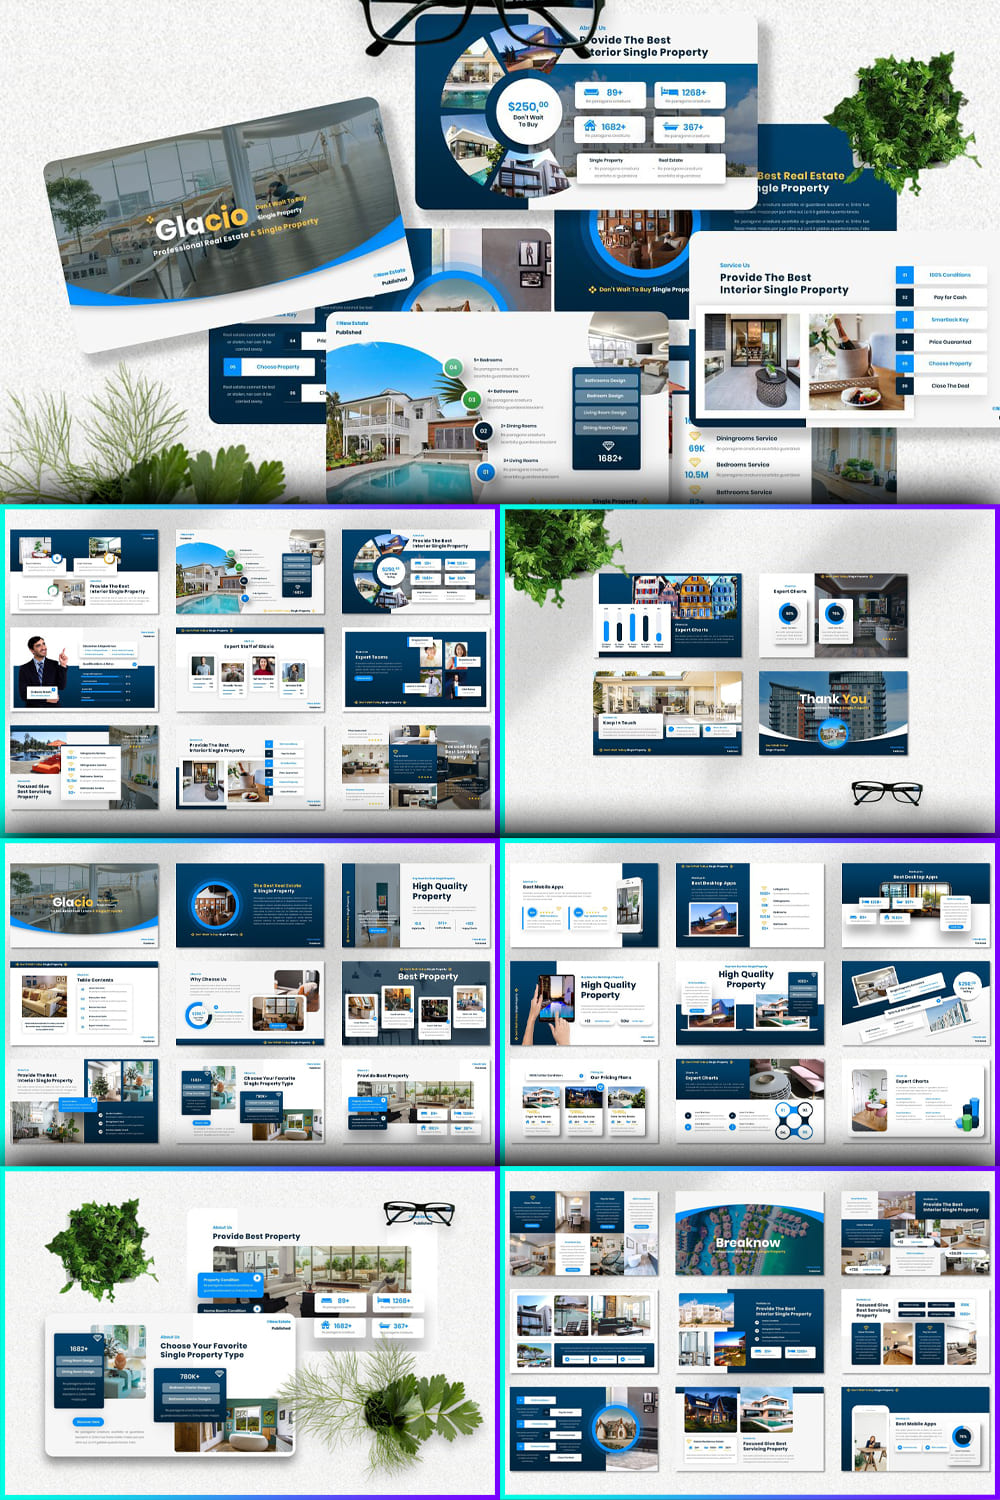 Glacio - Real Estate Google Slide pinterest image preview.